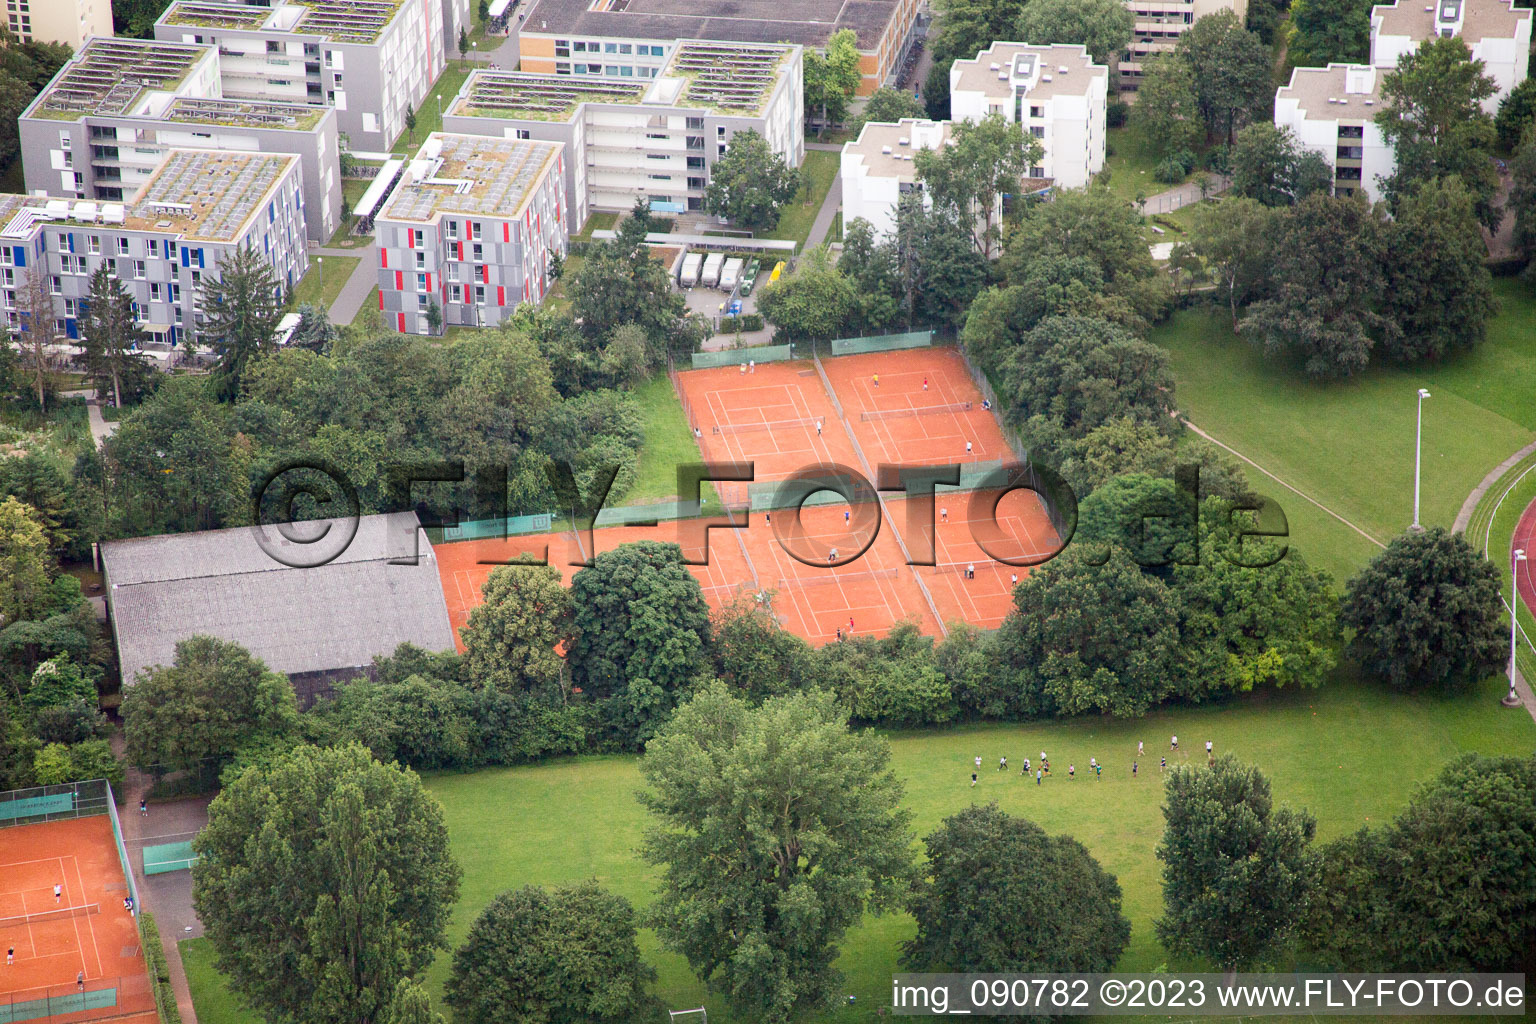 Vue aérienne de Handschuhsheim à le quartier Handschuhsheimer in Heidelberg dans le département Bade-Wurtemberg, Allemagne